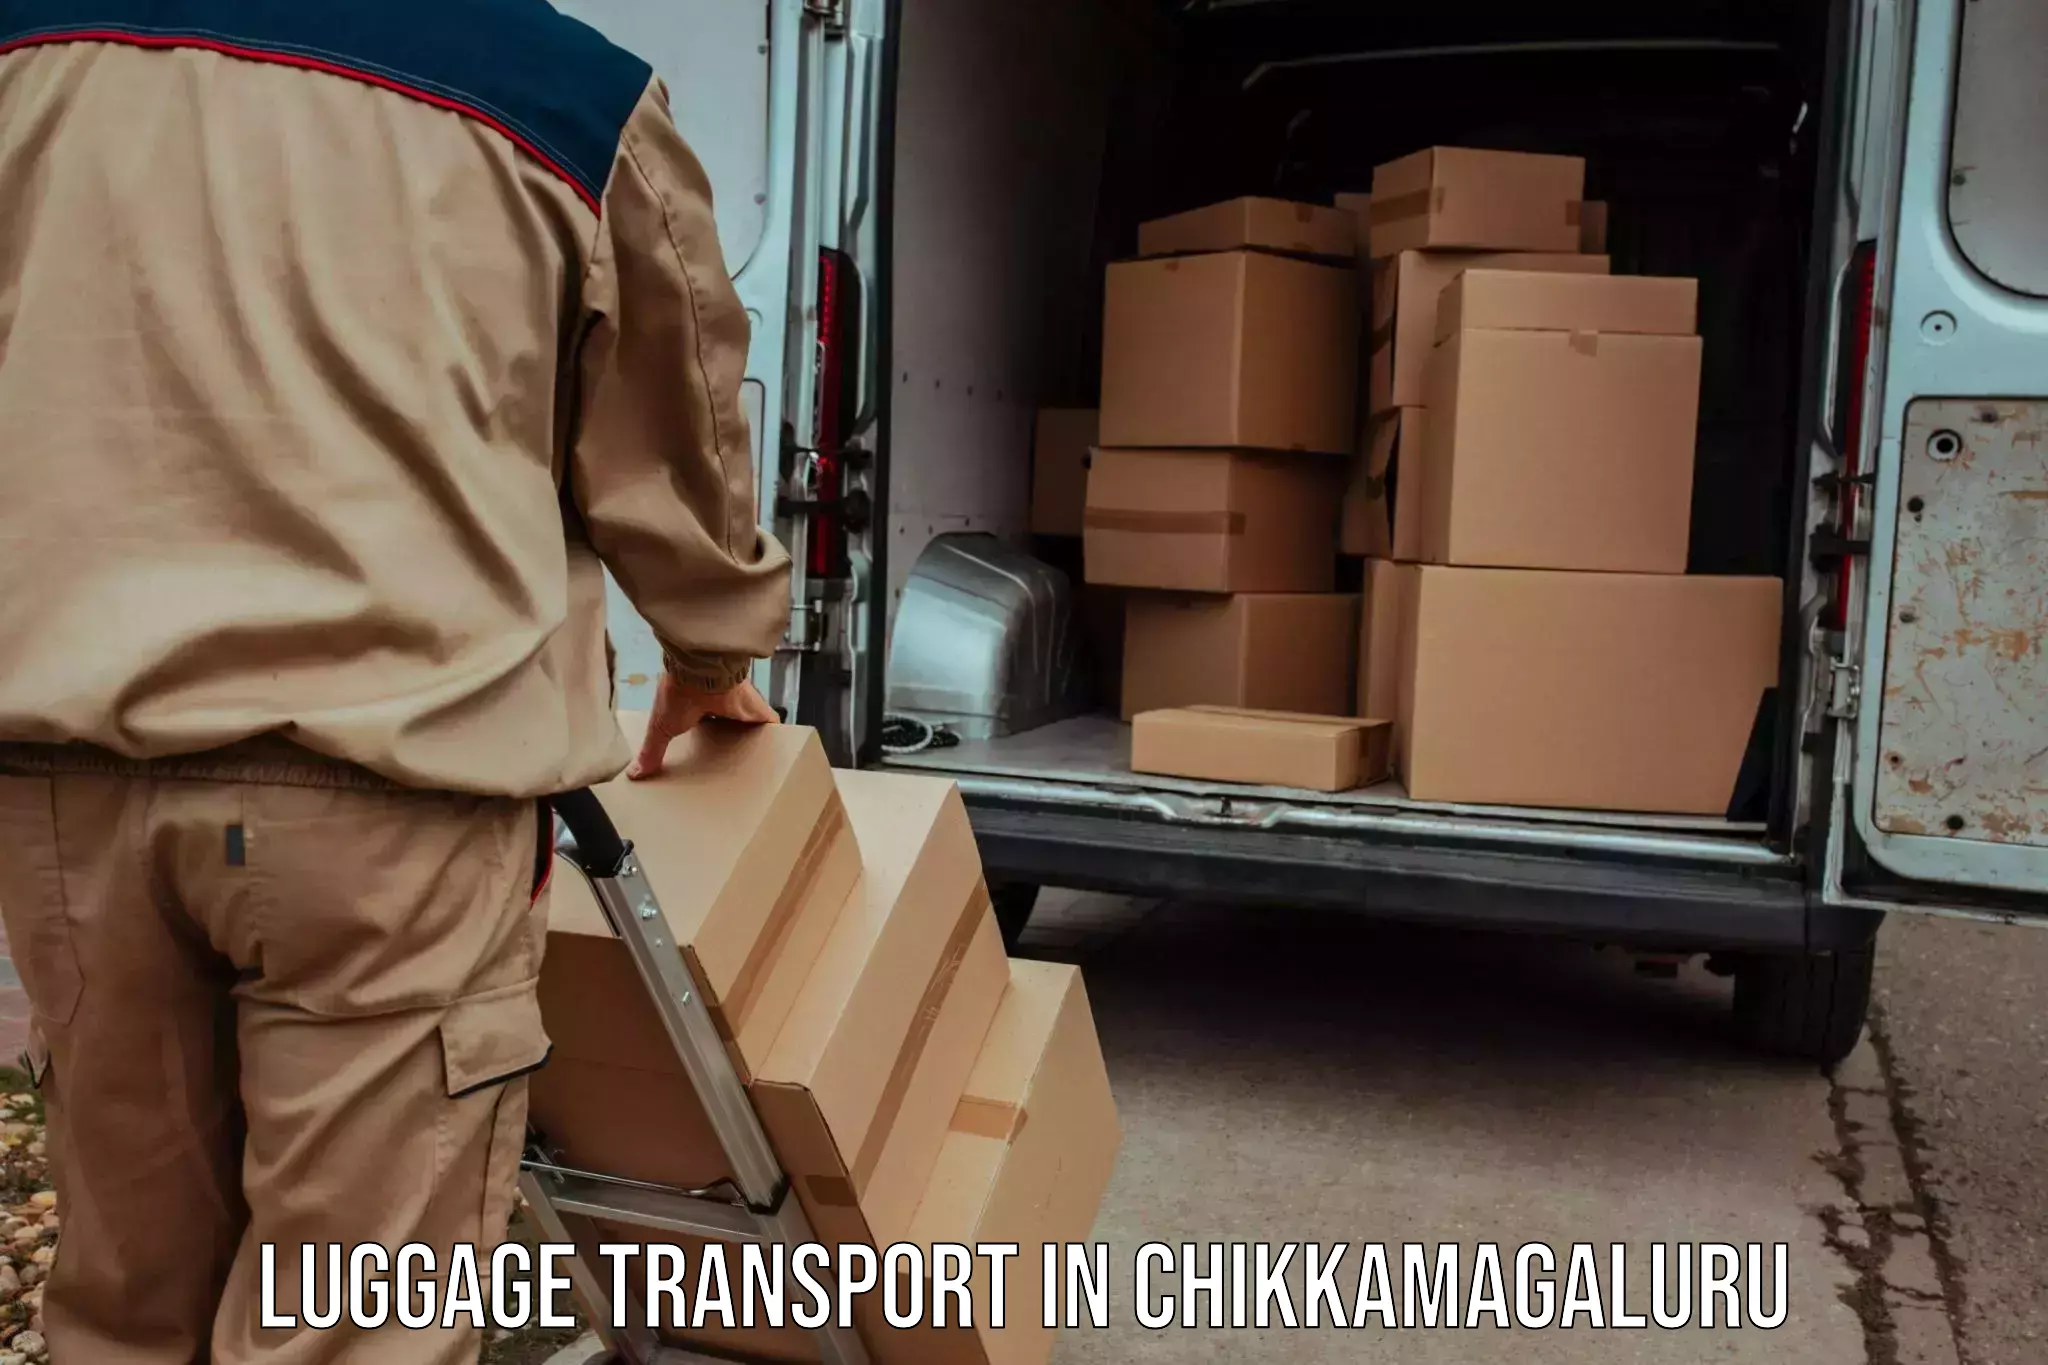 Emergency baggage service in Chikkamagaluru